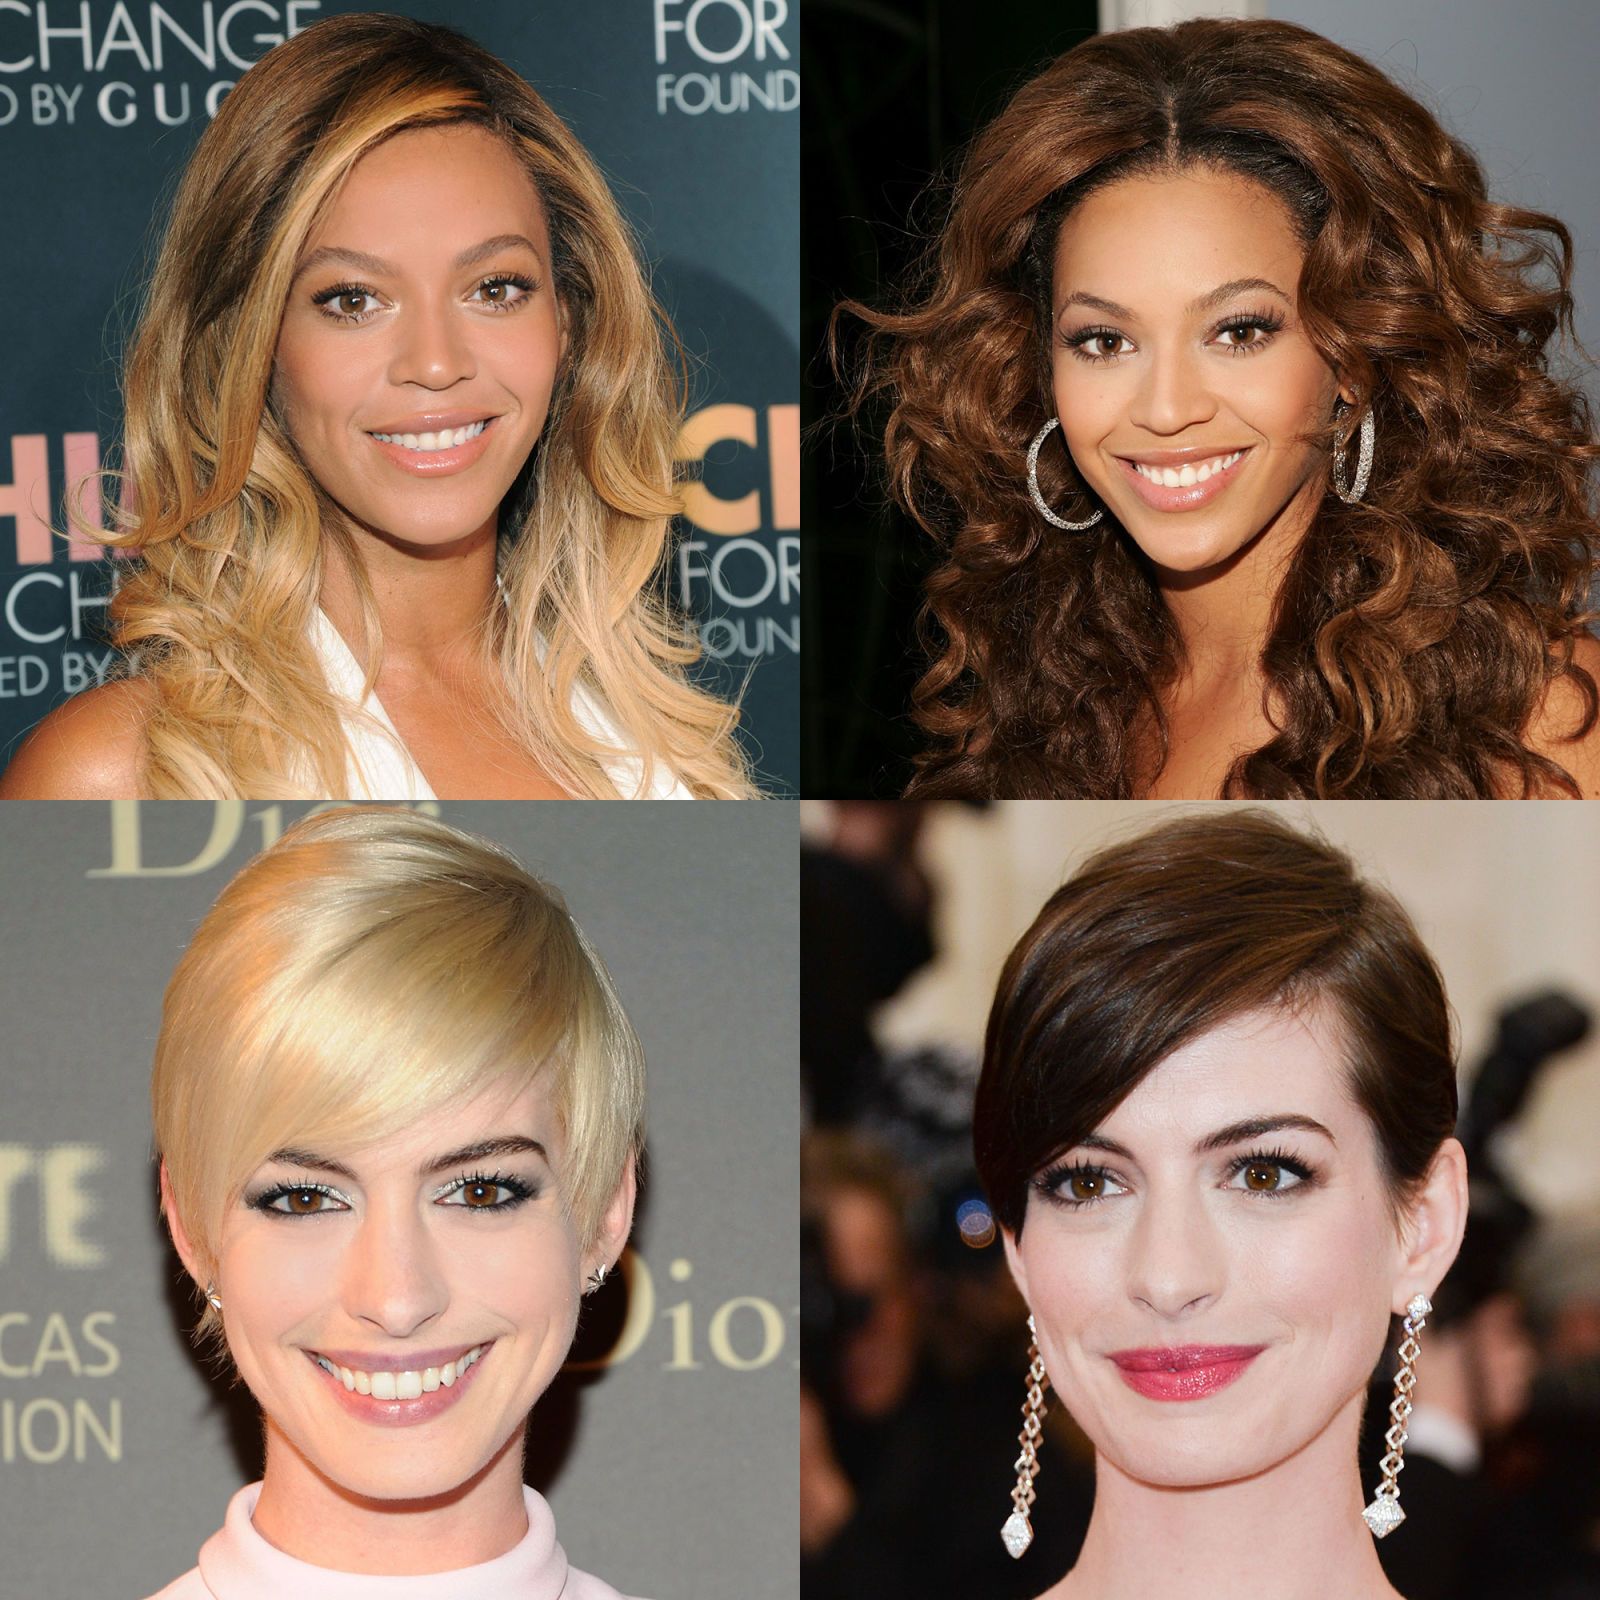 Blonde Vs Brunette Celebrities Vote For Blonde Or Brown Celebrity Hair Colors